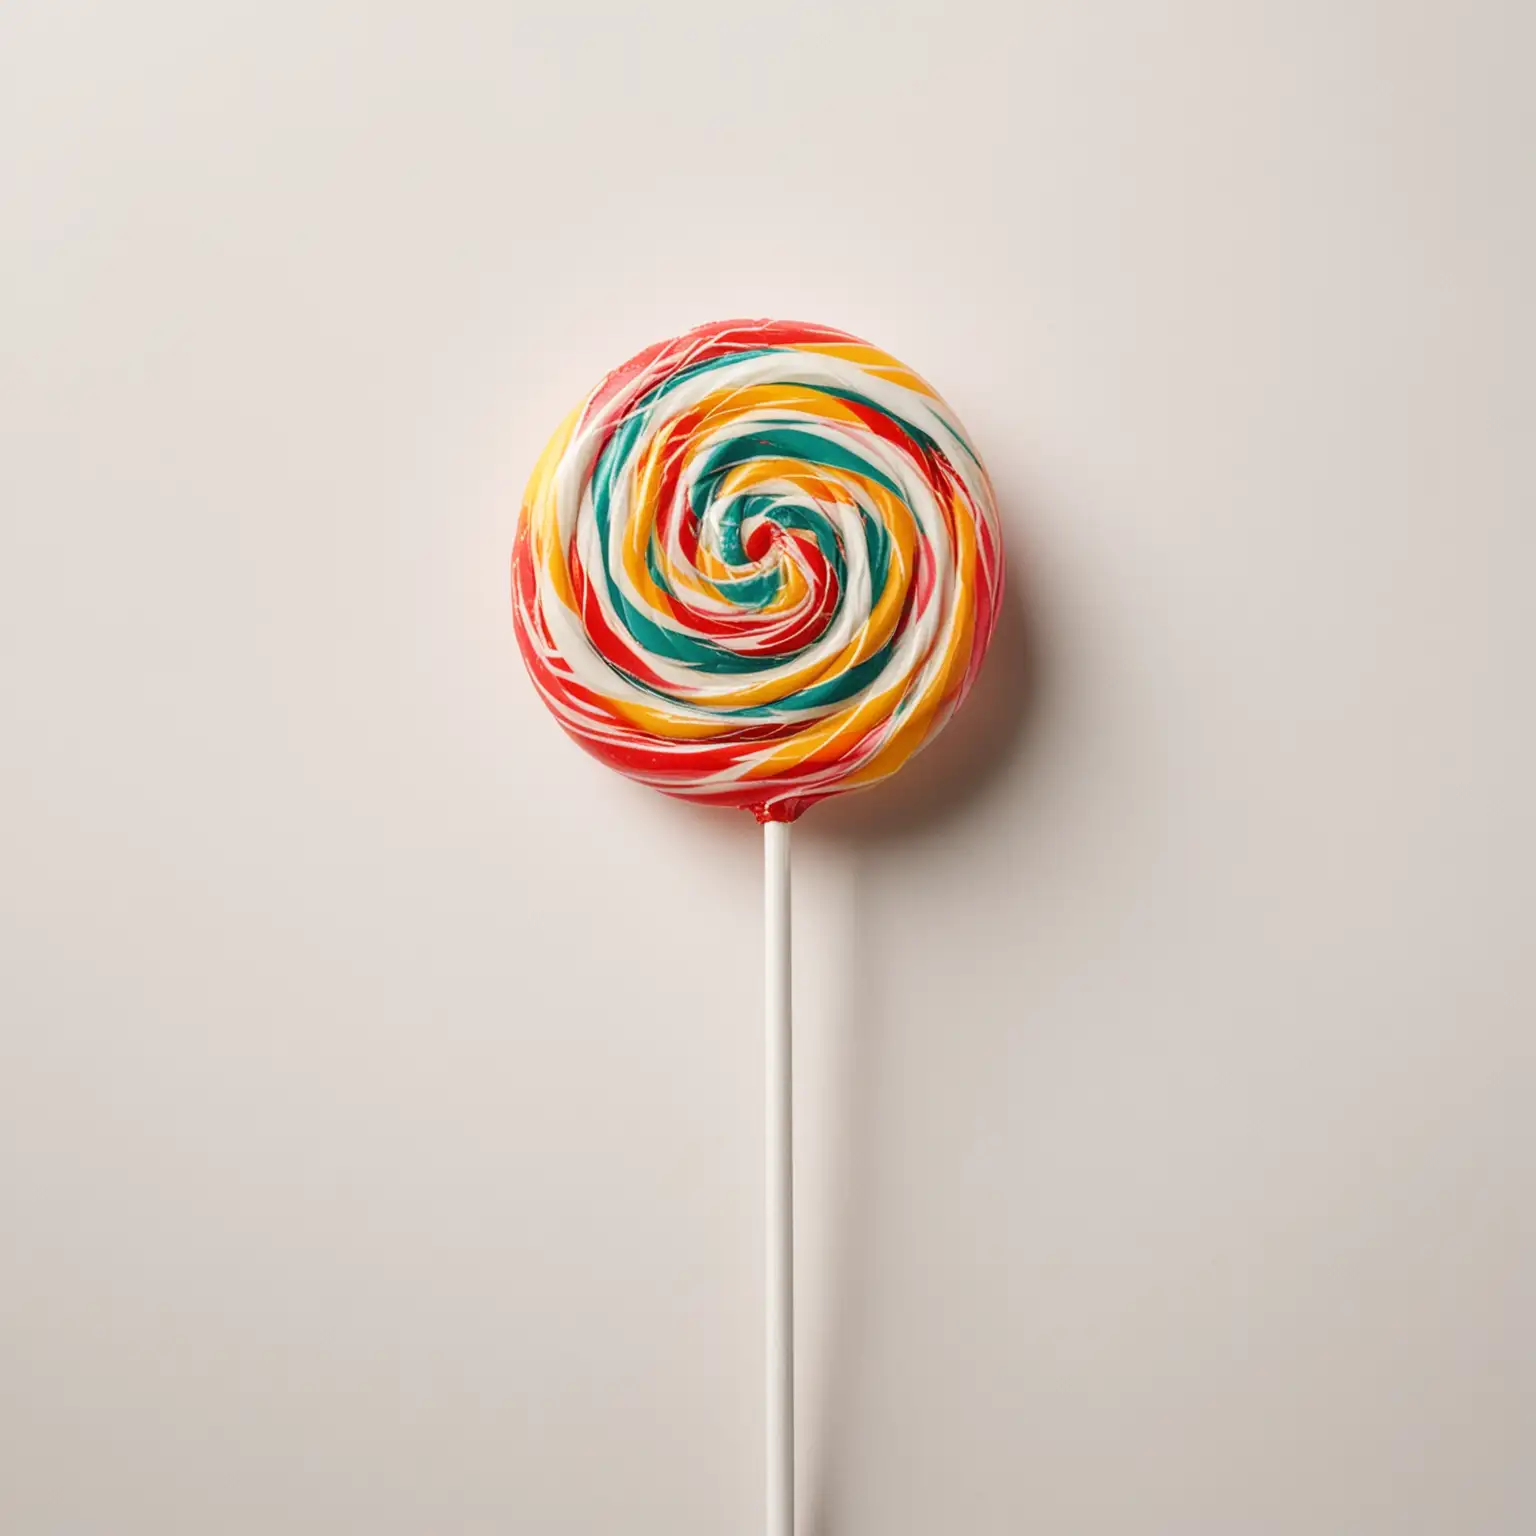 Vintage Lollipop on White Background